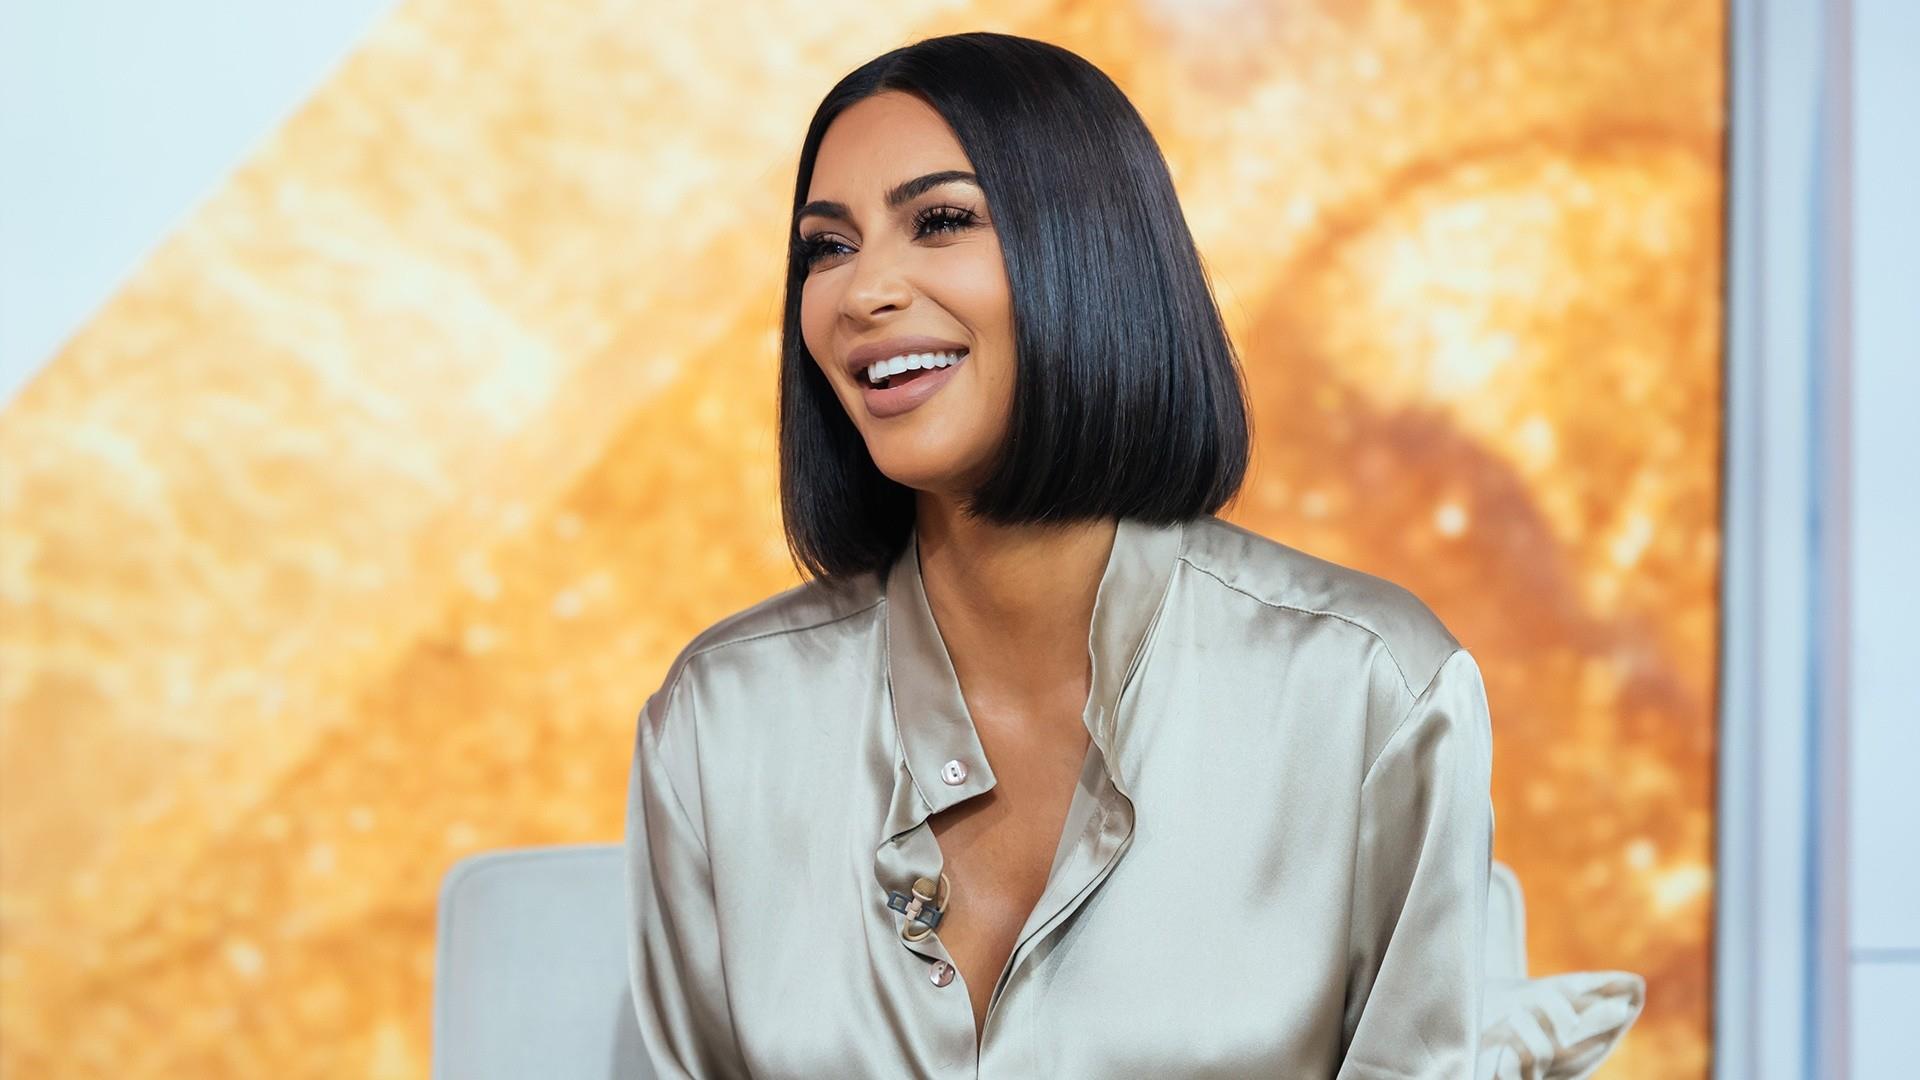 KKW Home: Kim Kardashian West may be launching home goods line